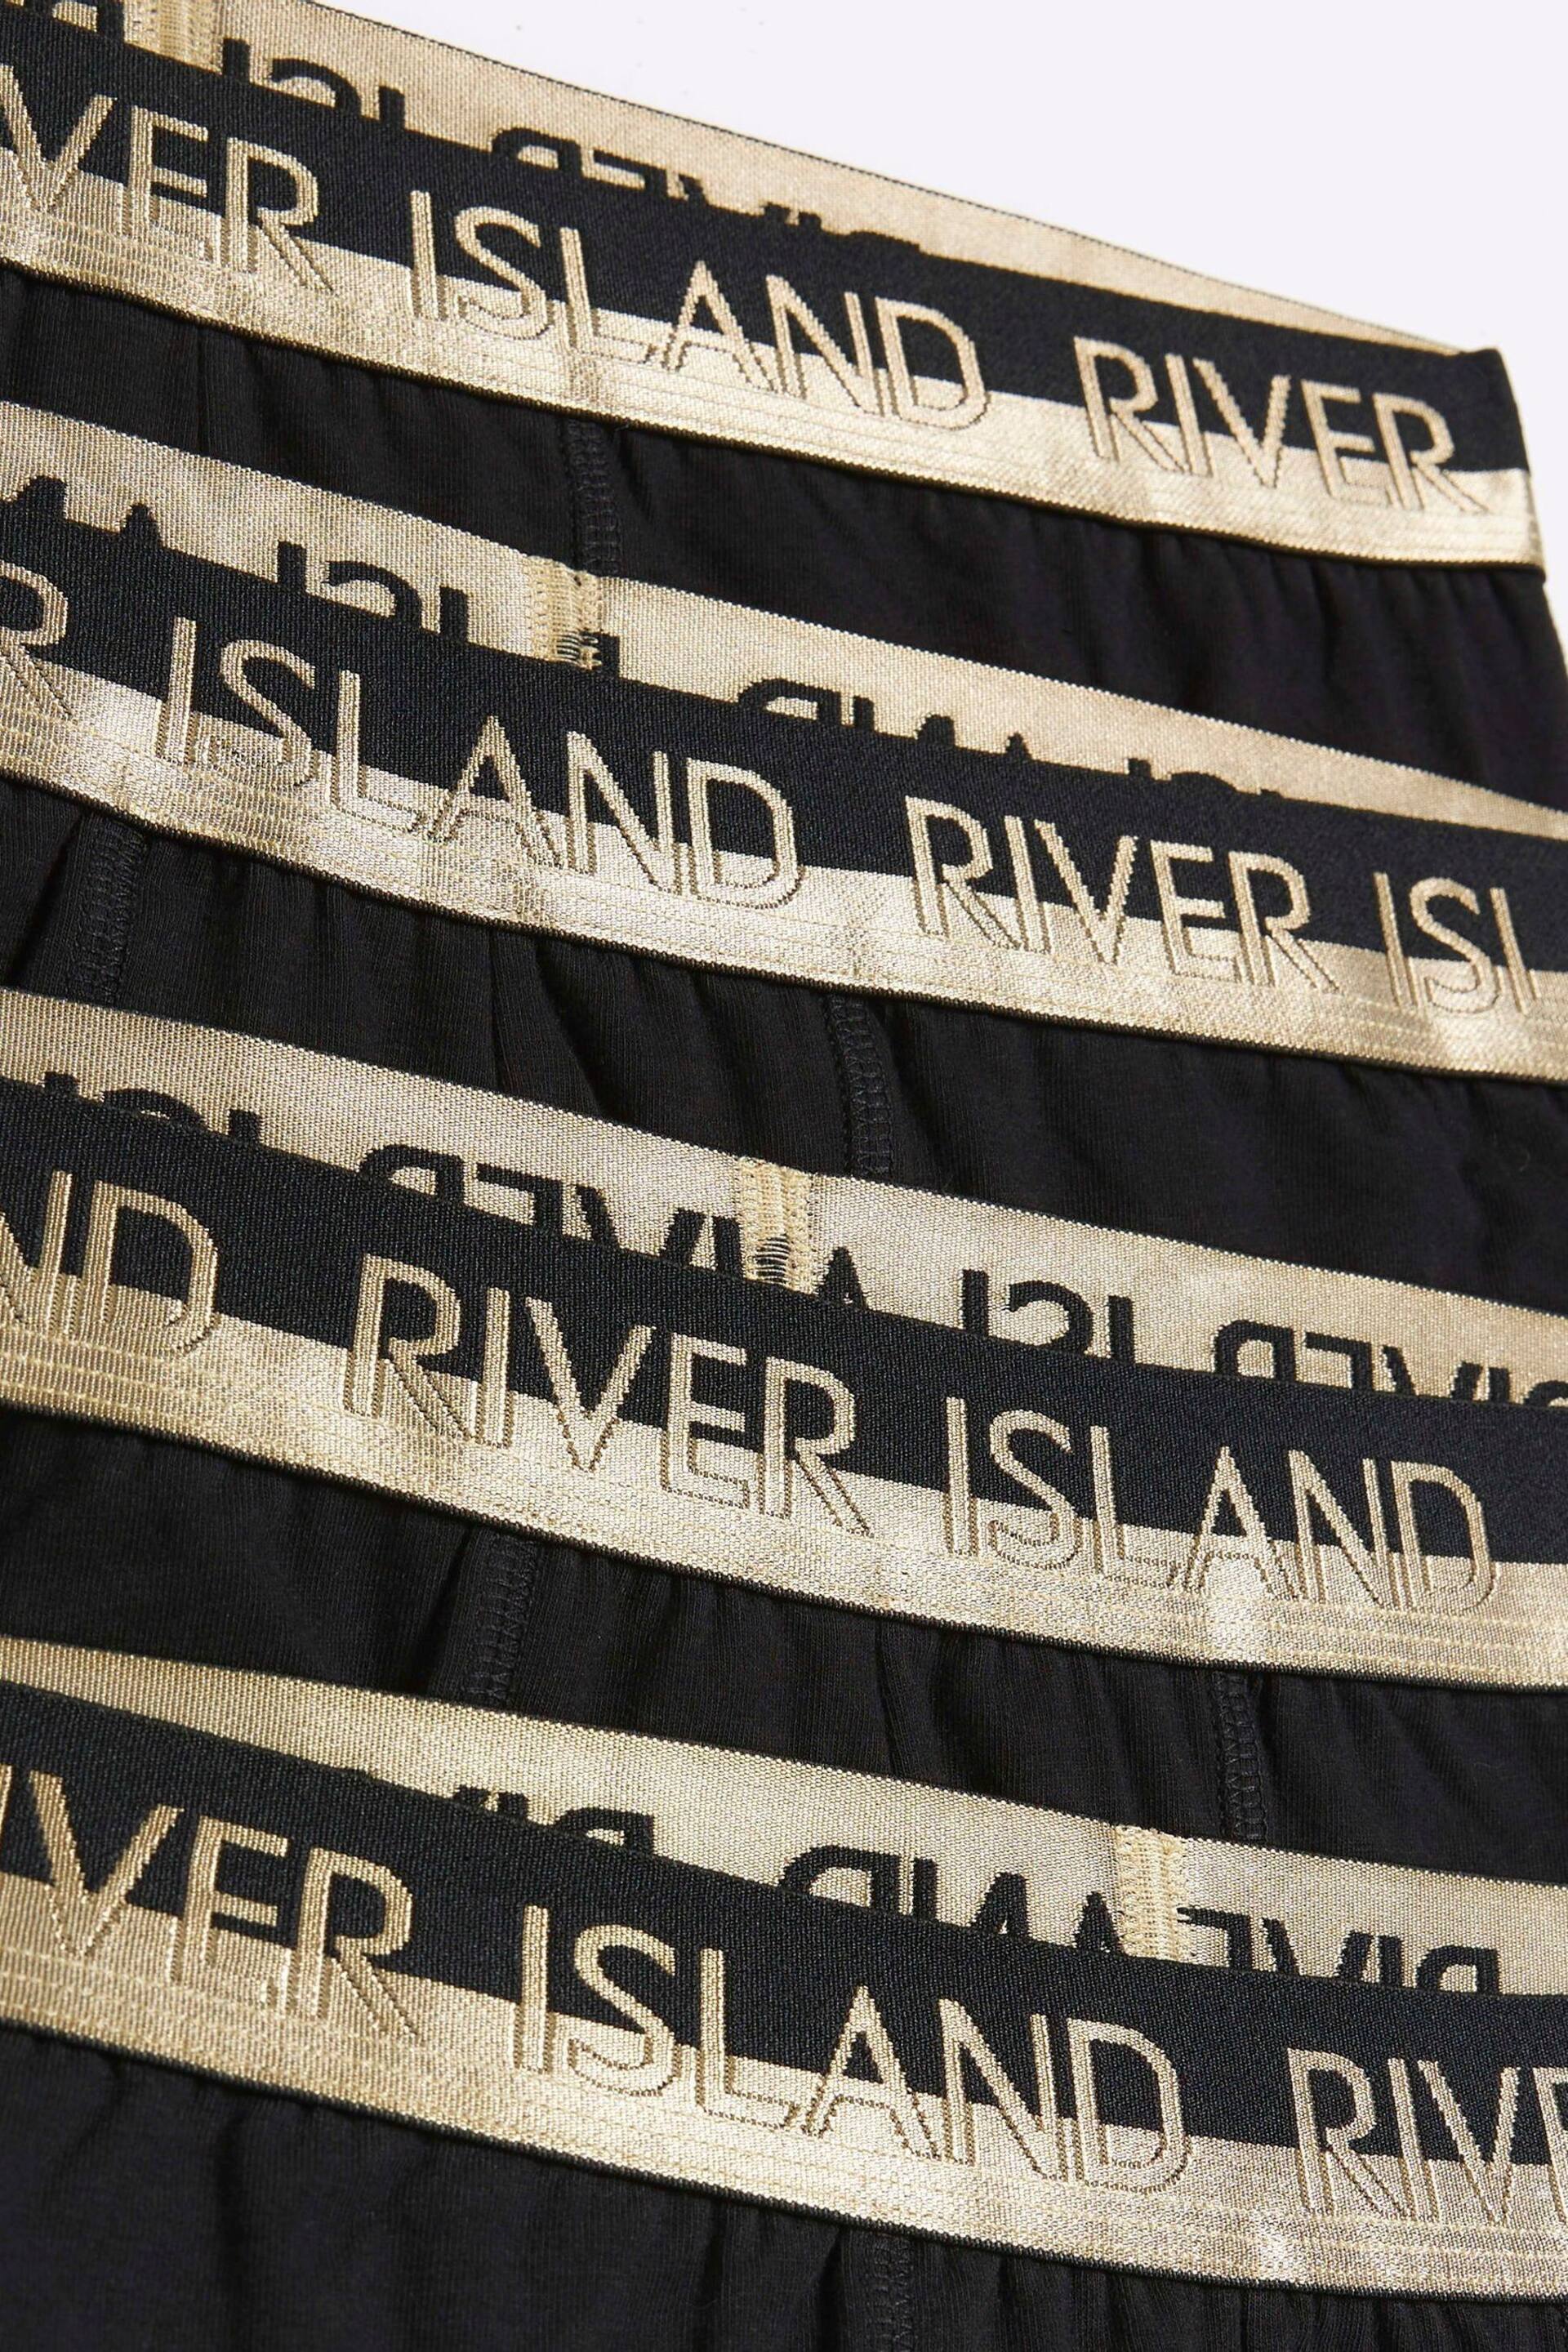 River Island Black Gold Trunks 4 Pack - Image 2 of 4